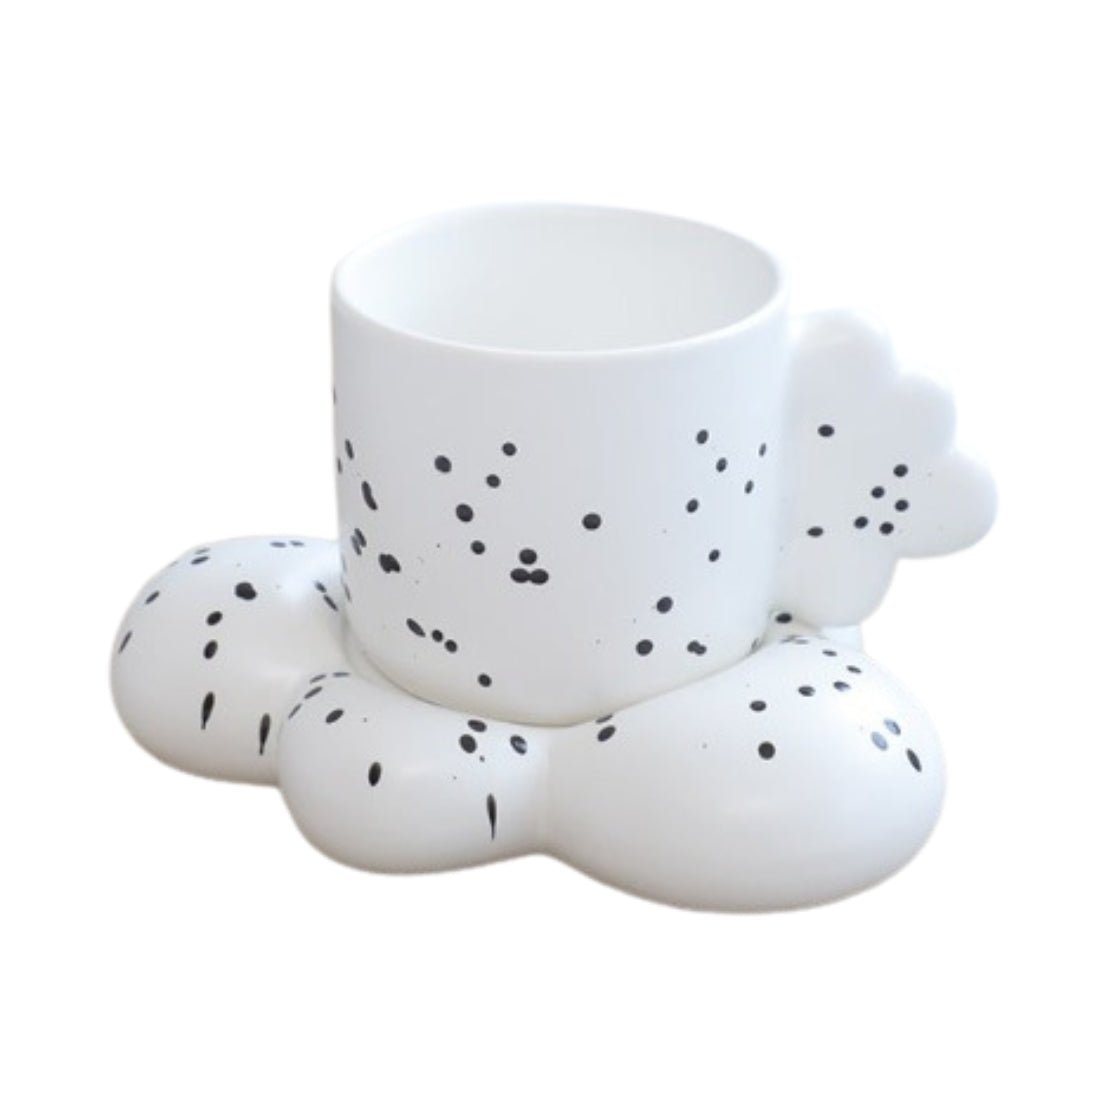 White and black splash ink ceramic mug with cloud handle and saucer